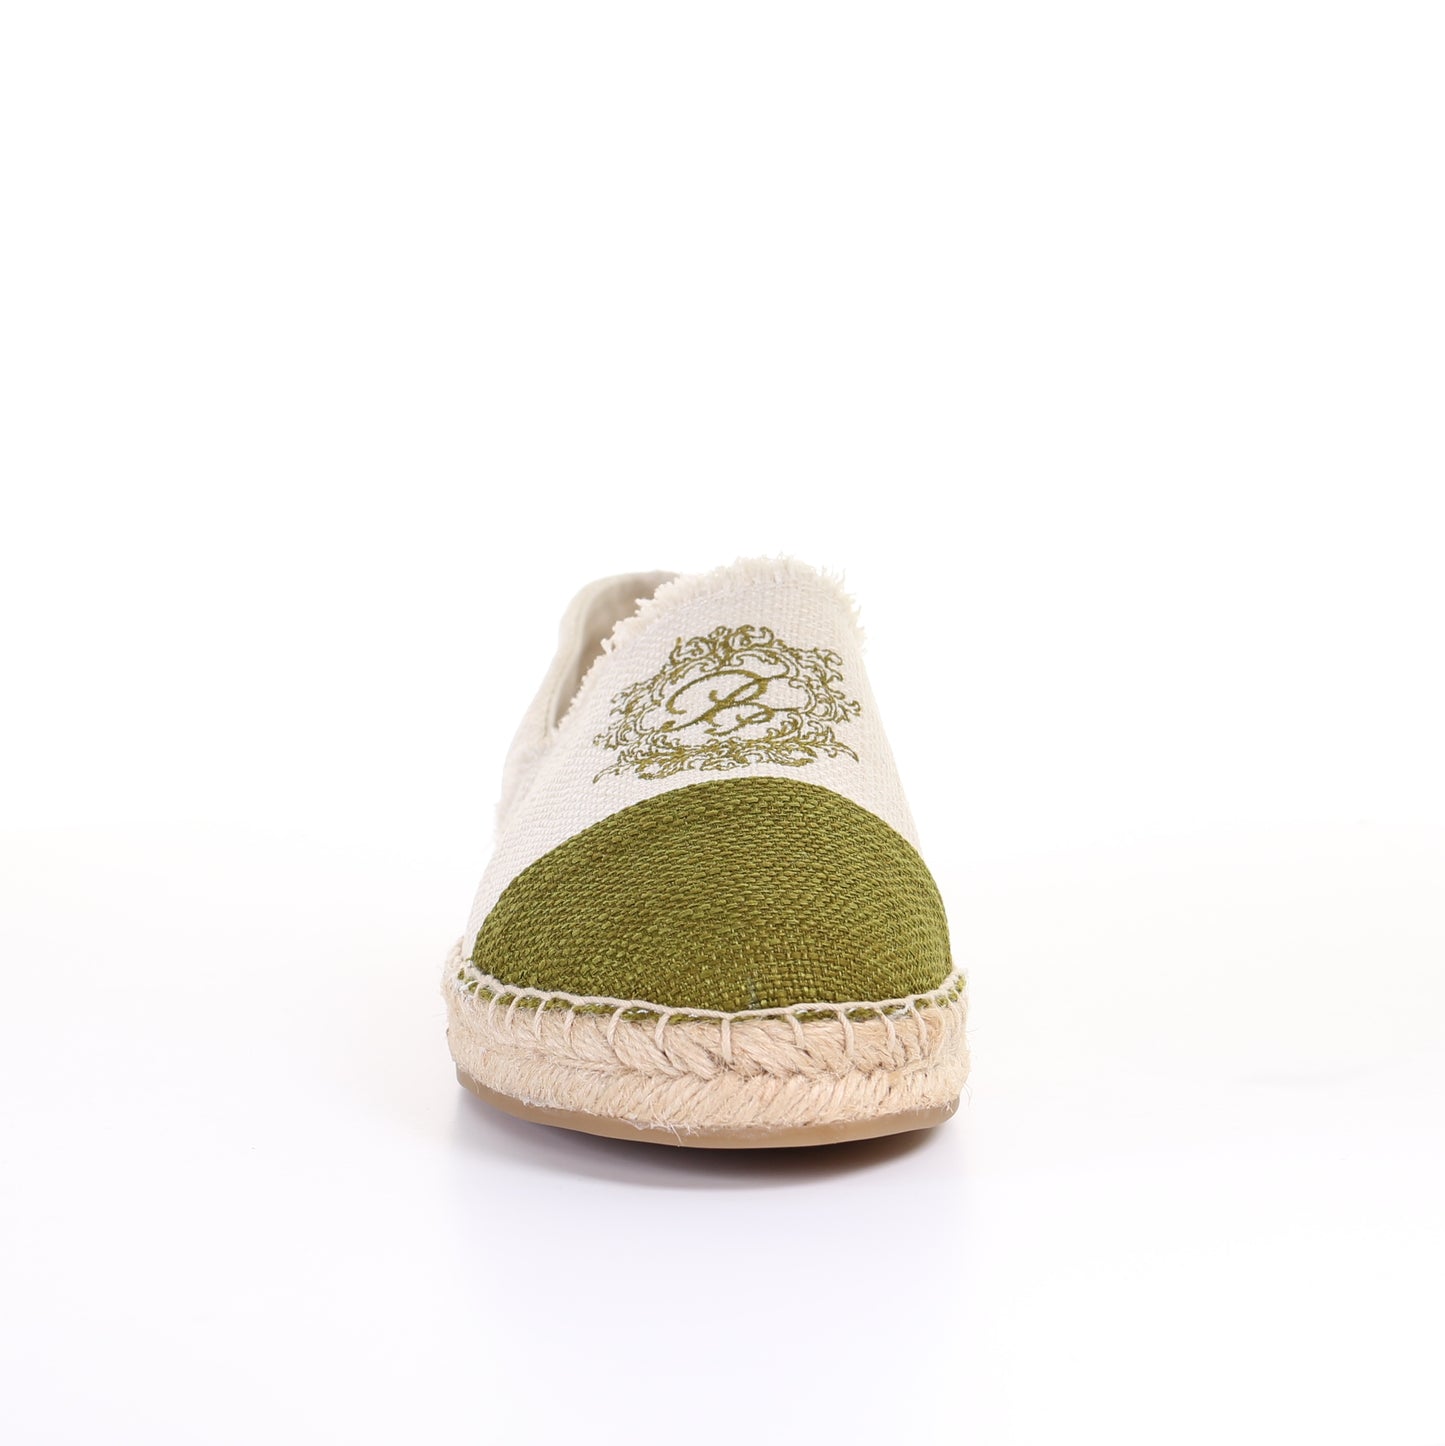 Towtone草編鞋-綠